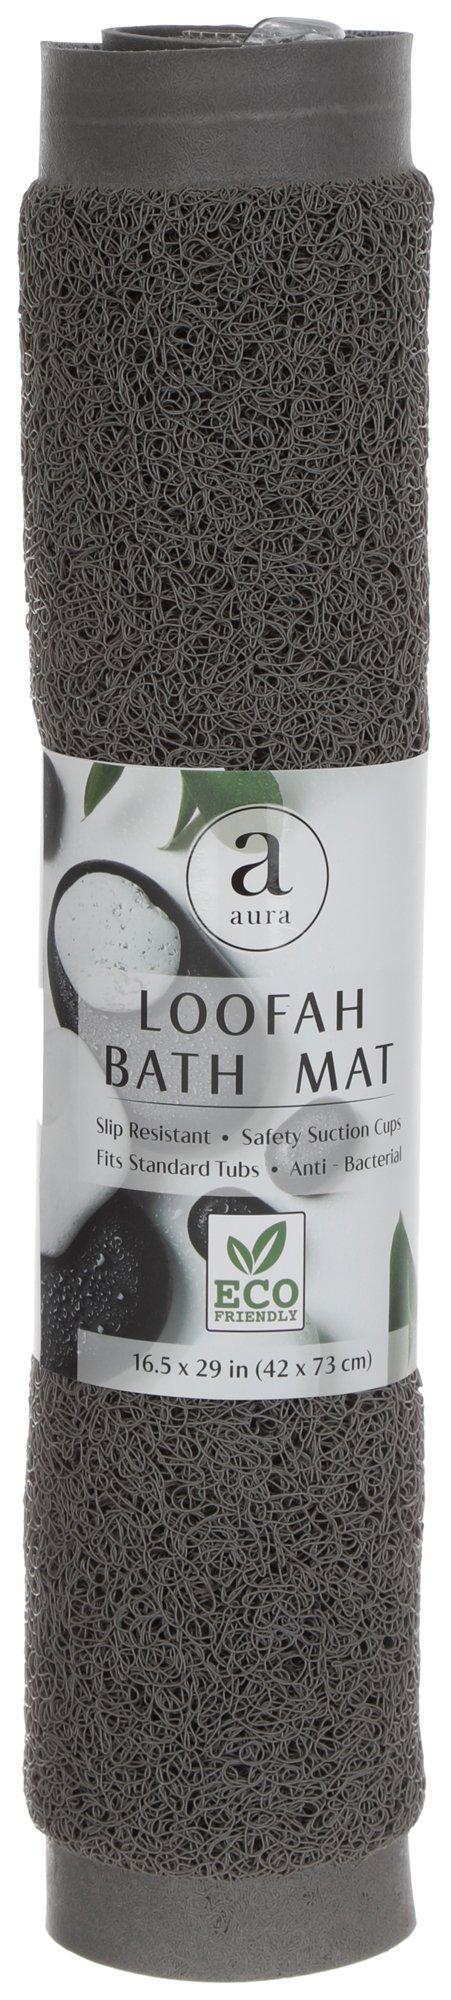 16.5x29 Loofah Bath Mat